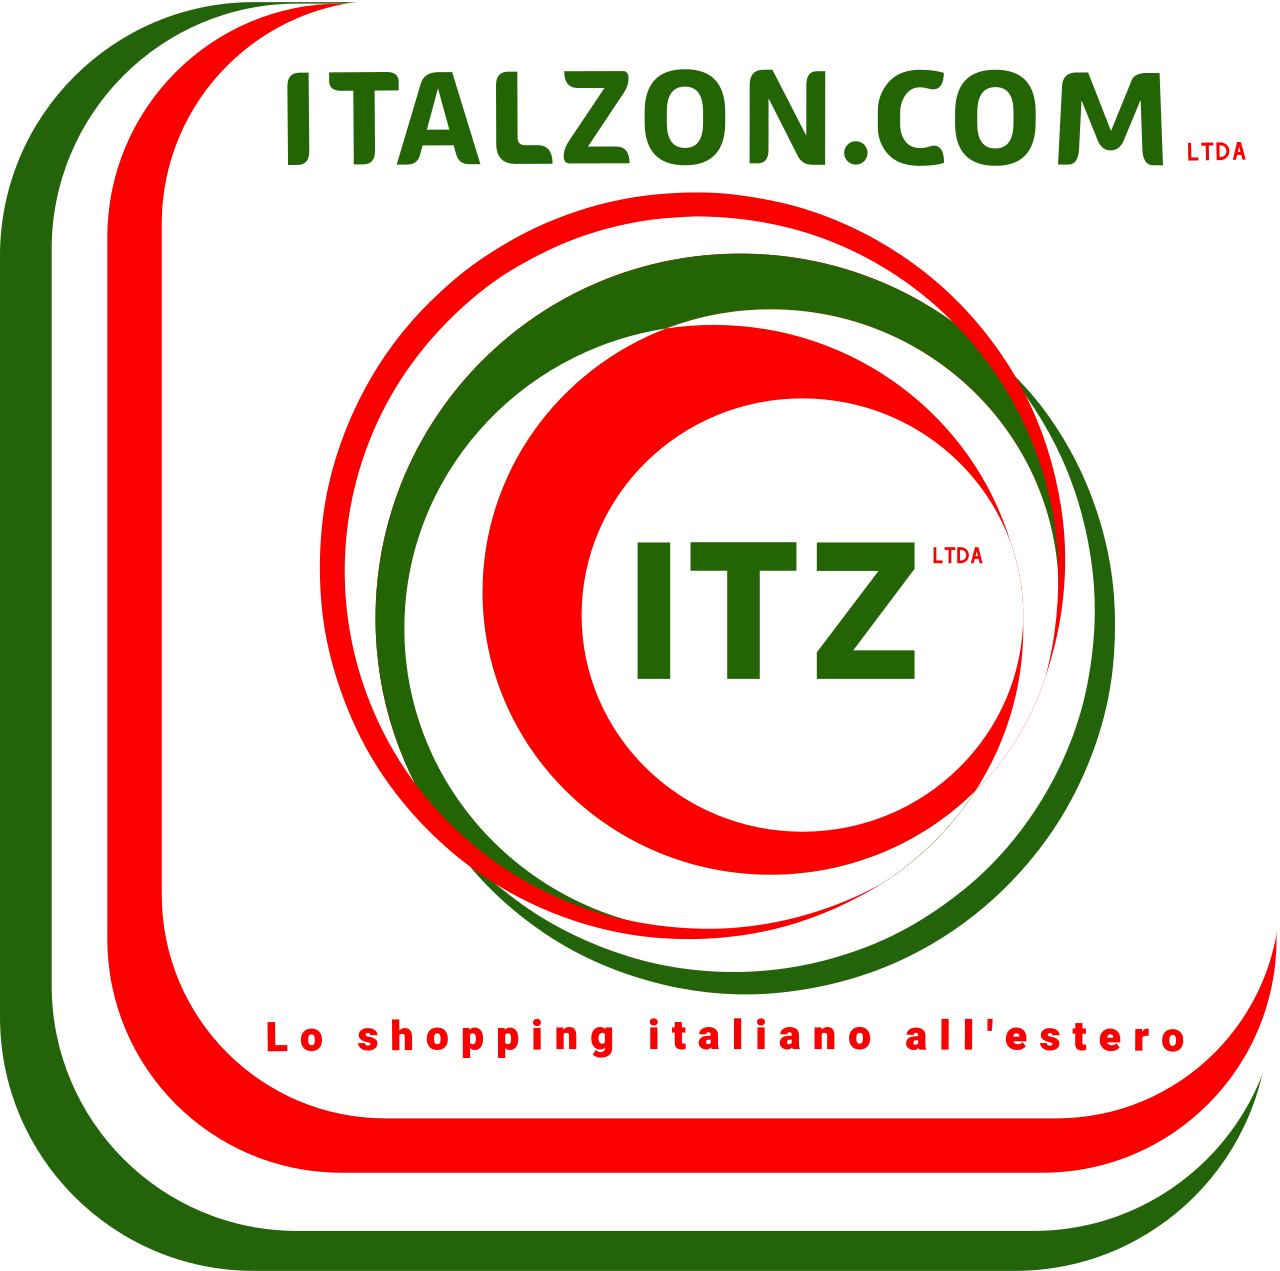 ITALZON.COM's logo